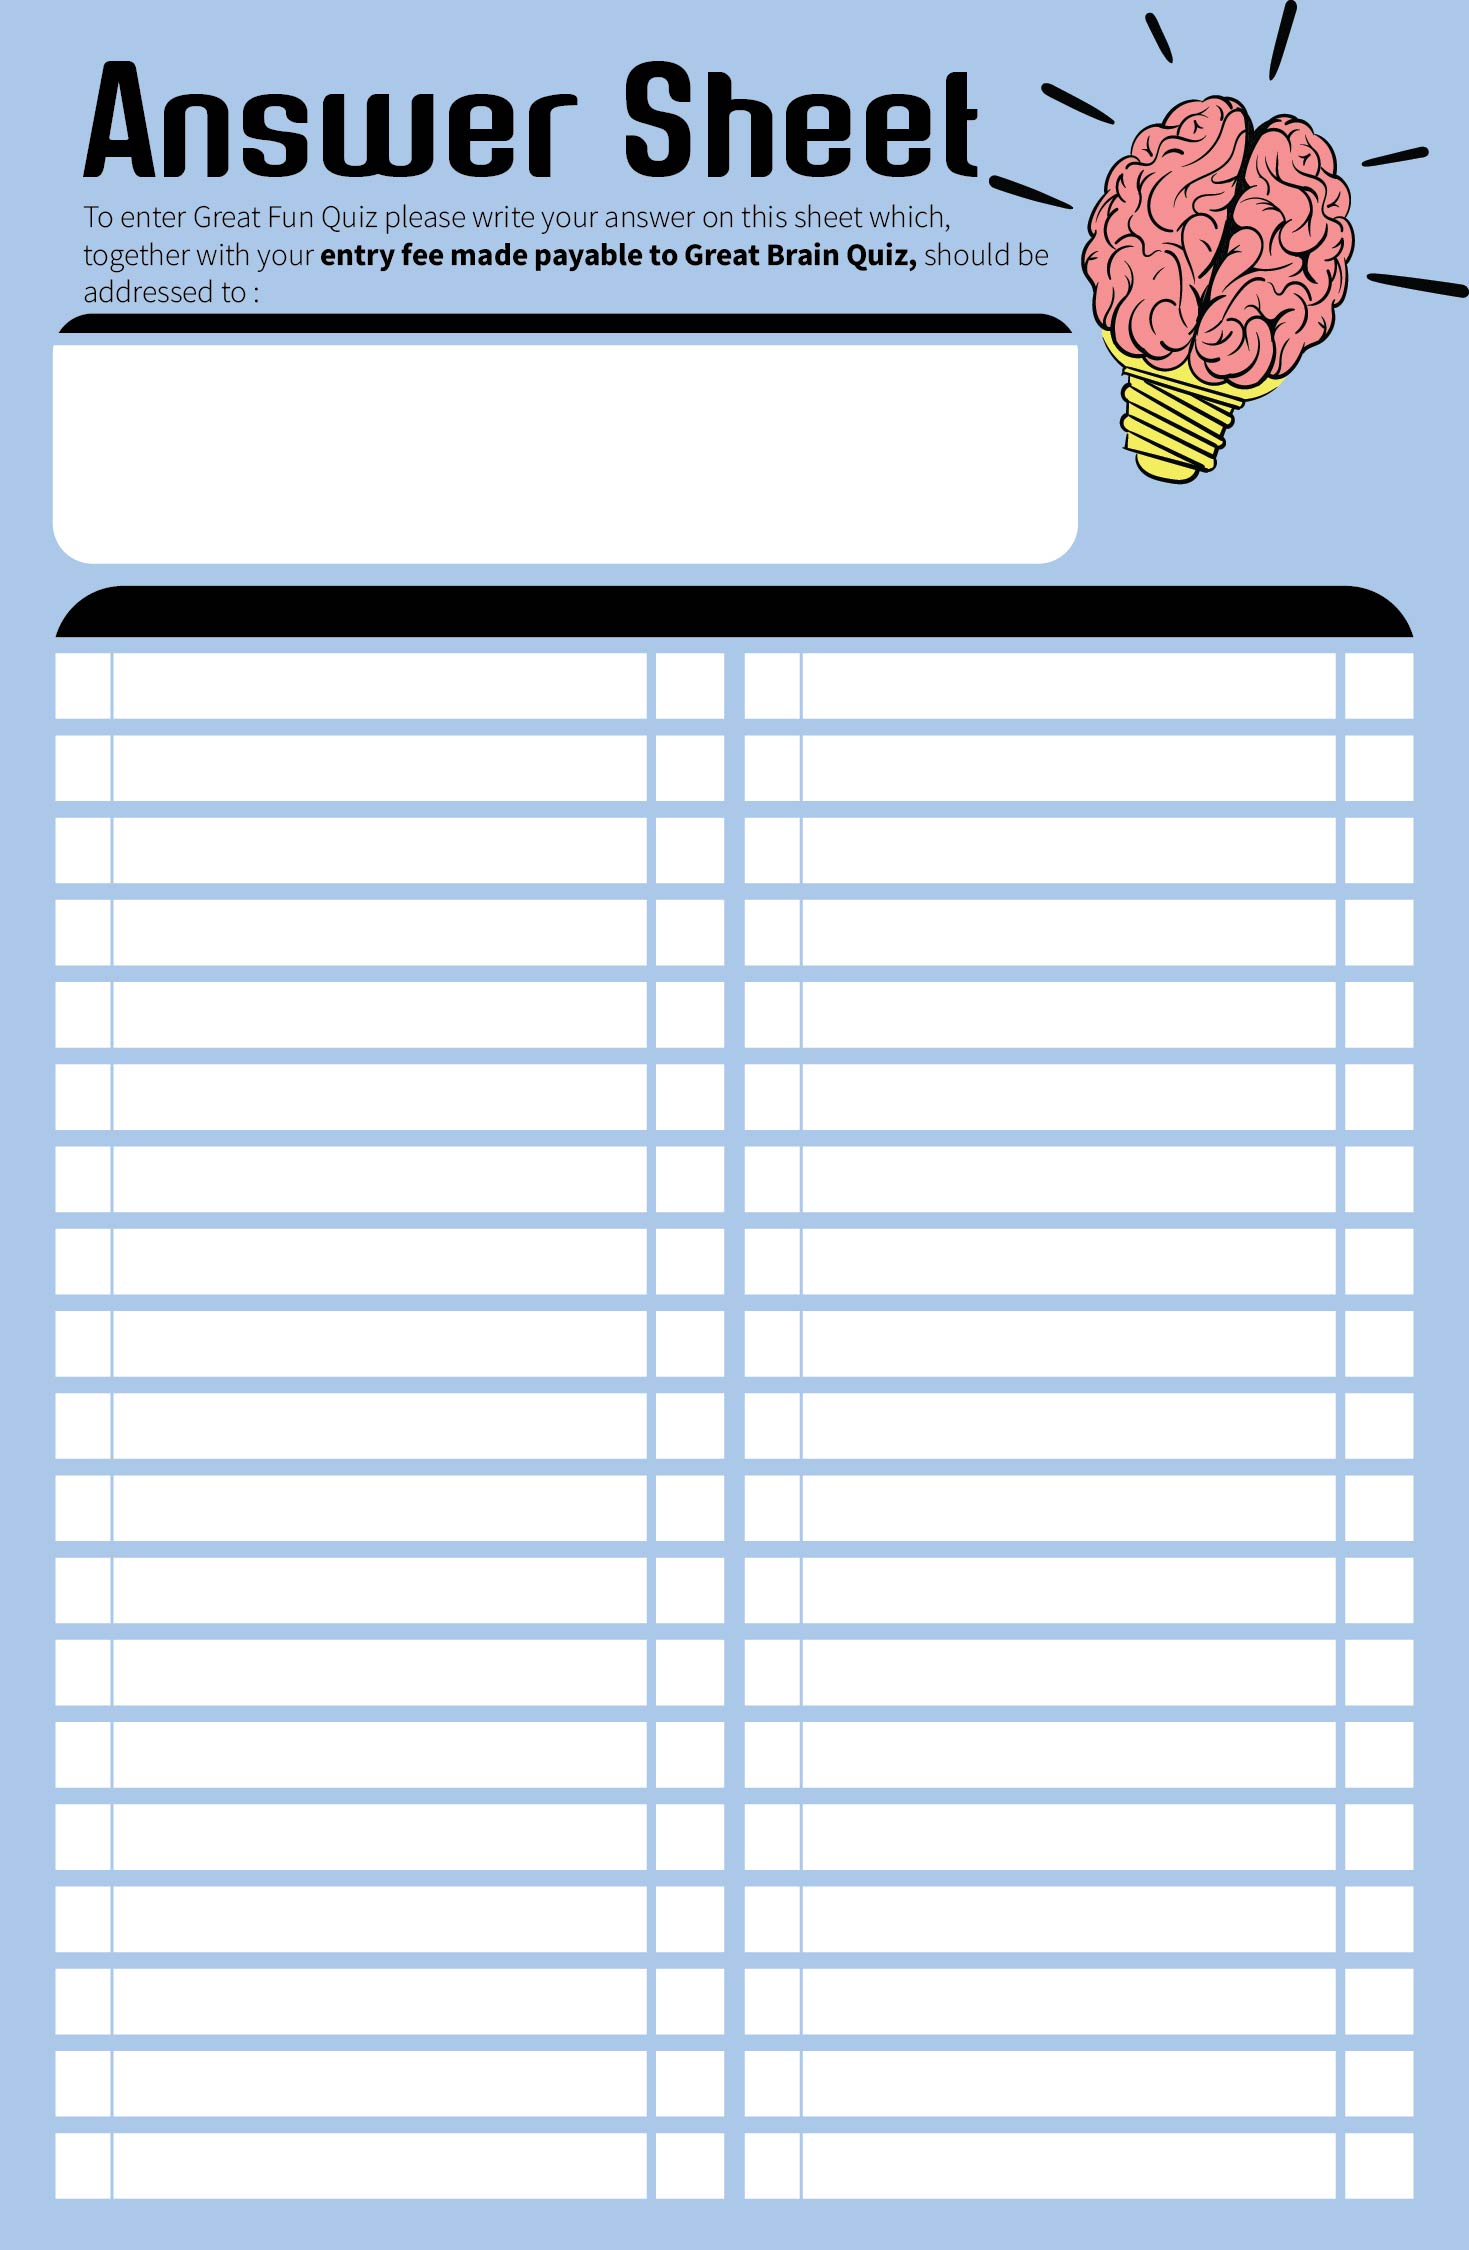 blank-answer-sheet-template-22-2200